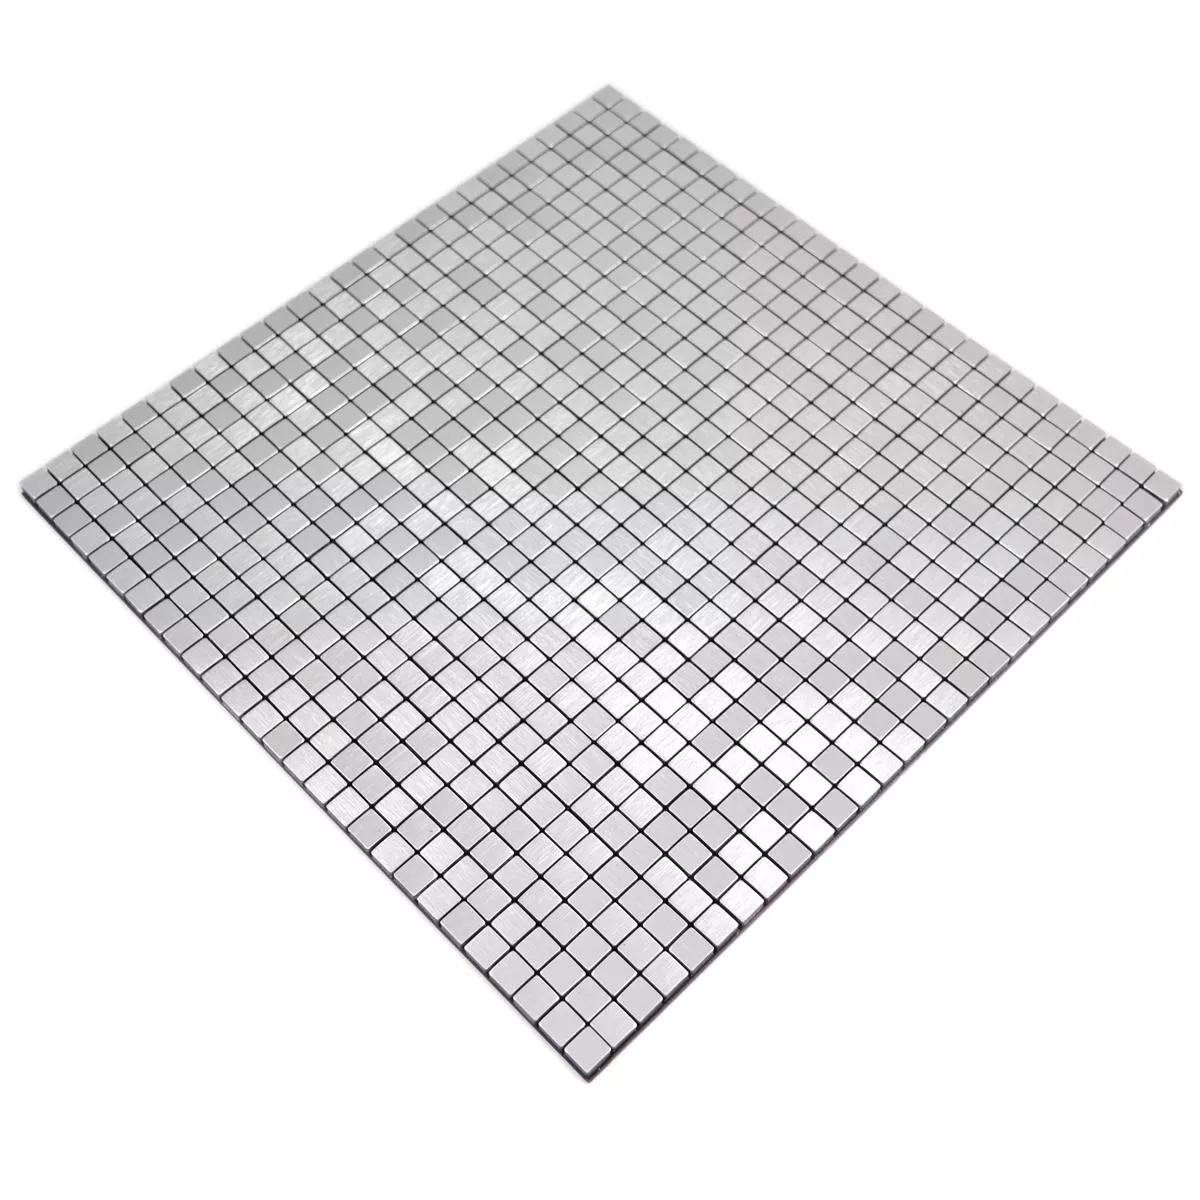 Metallo Mosaico Wygon Autoadesivo Argento 10mm